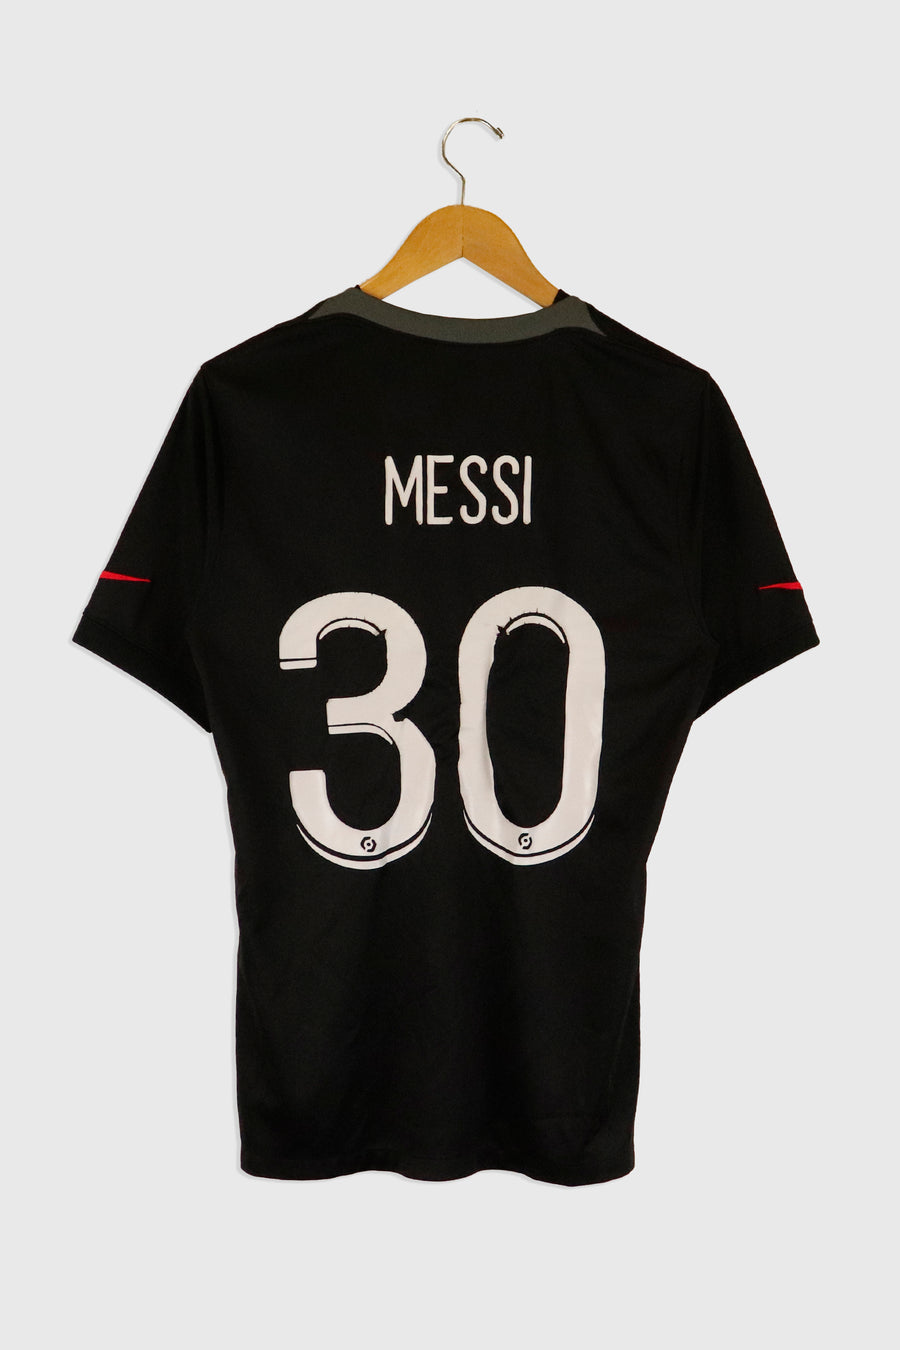 Vintage Nike Messi 30 Accor Live Limitless Paris Jersey Sz M